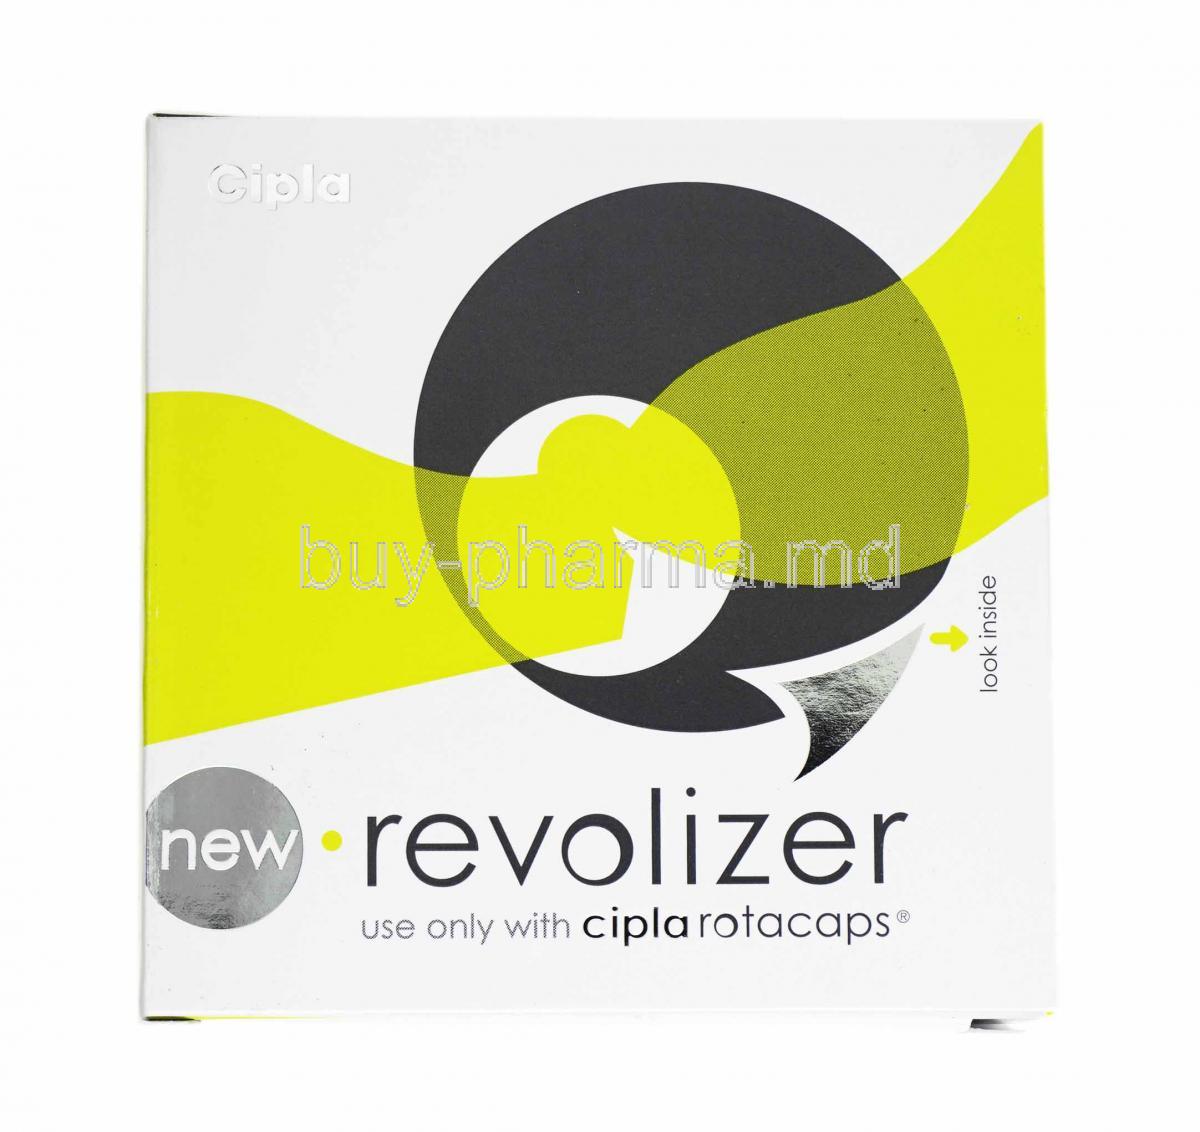 Revolizer Device box